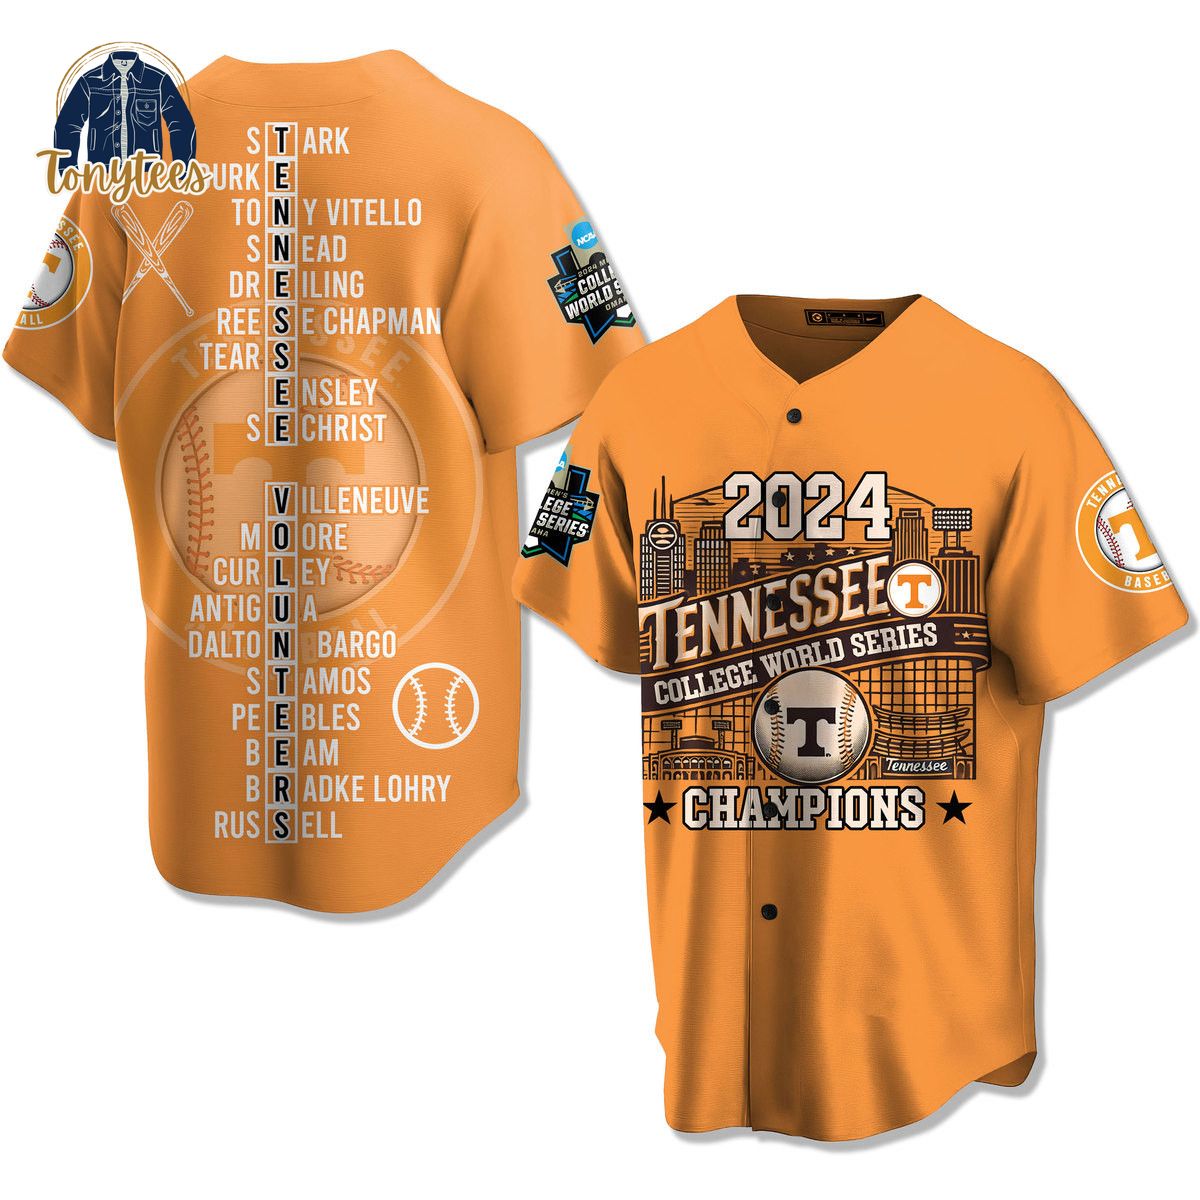 Tennessee Volunteers college world series champions baseball jersey